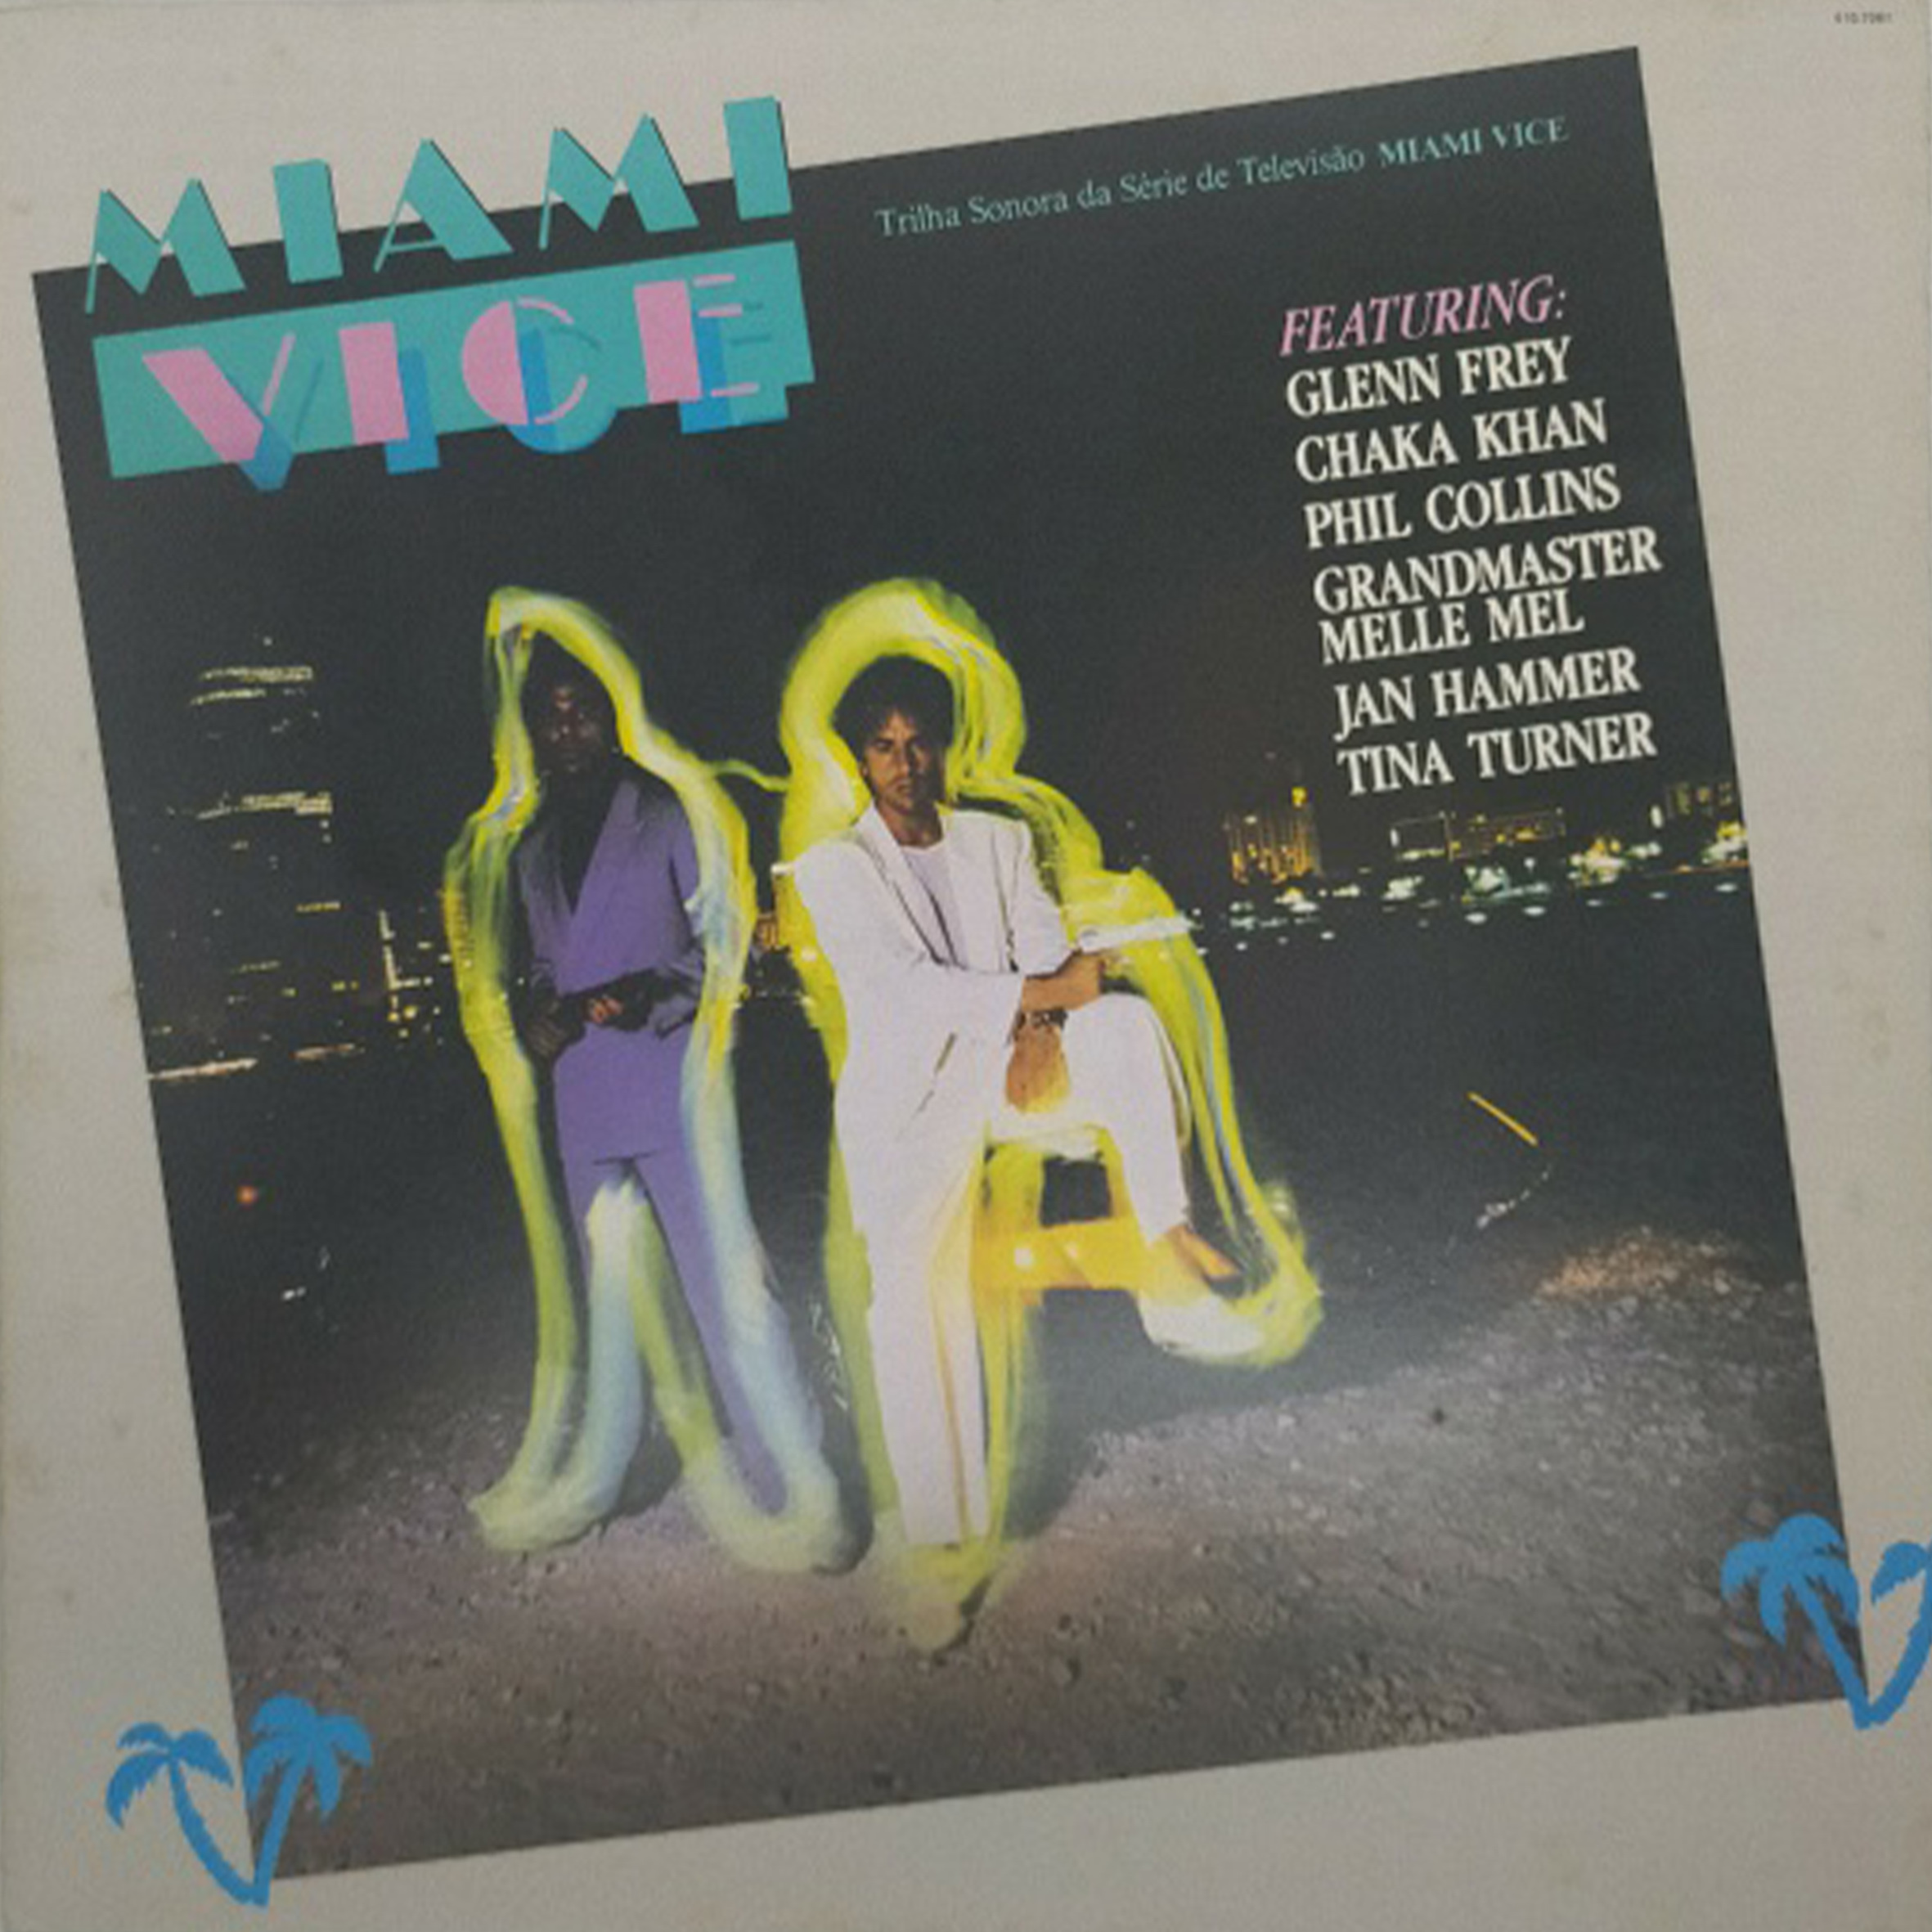 Vinil - Miami Vice - Trilha Sonora da Série de Televisão